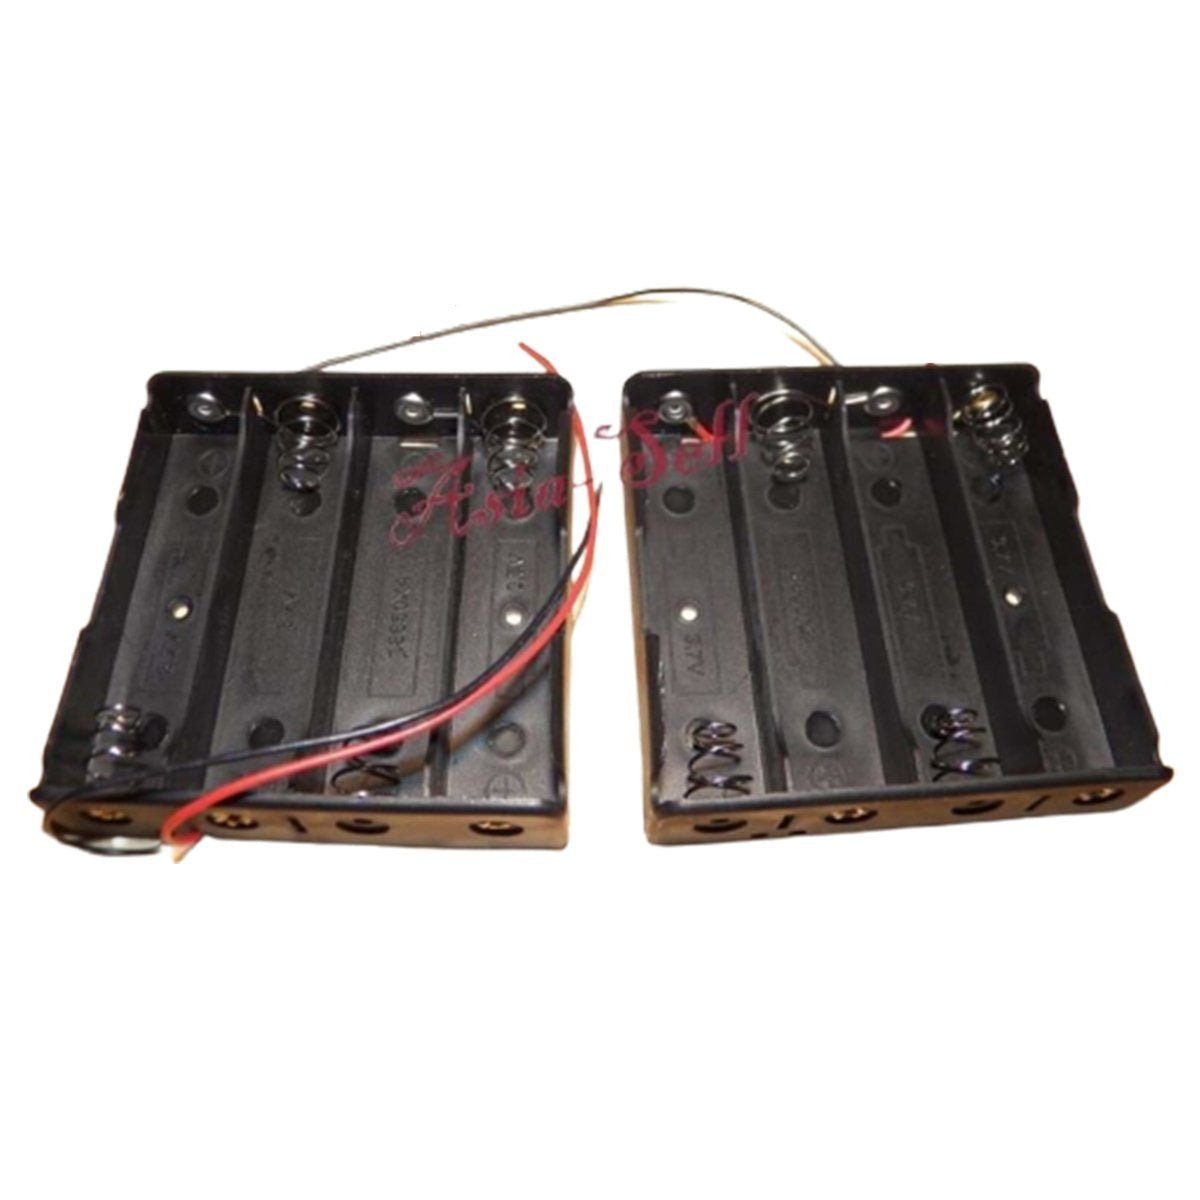 1pcs 4x18650 Battery Holder 14.8V Storage Box Case Leads Wires 4x3.7V 4 x 18650 - Asia Sell